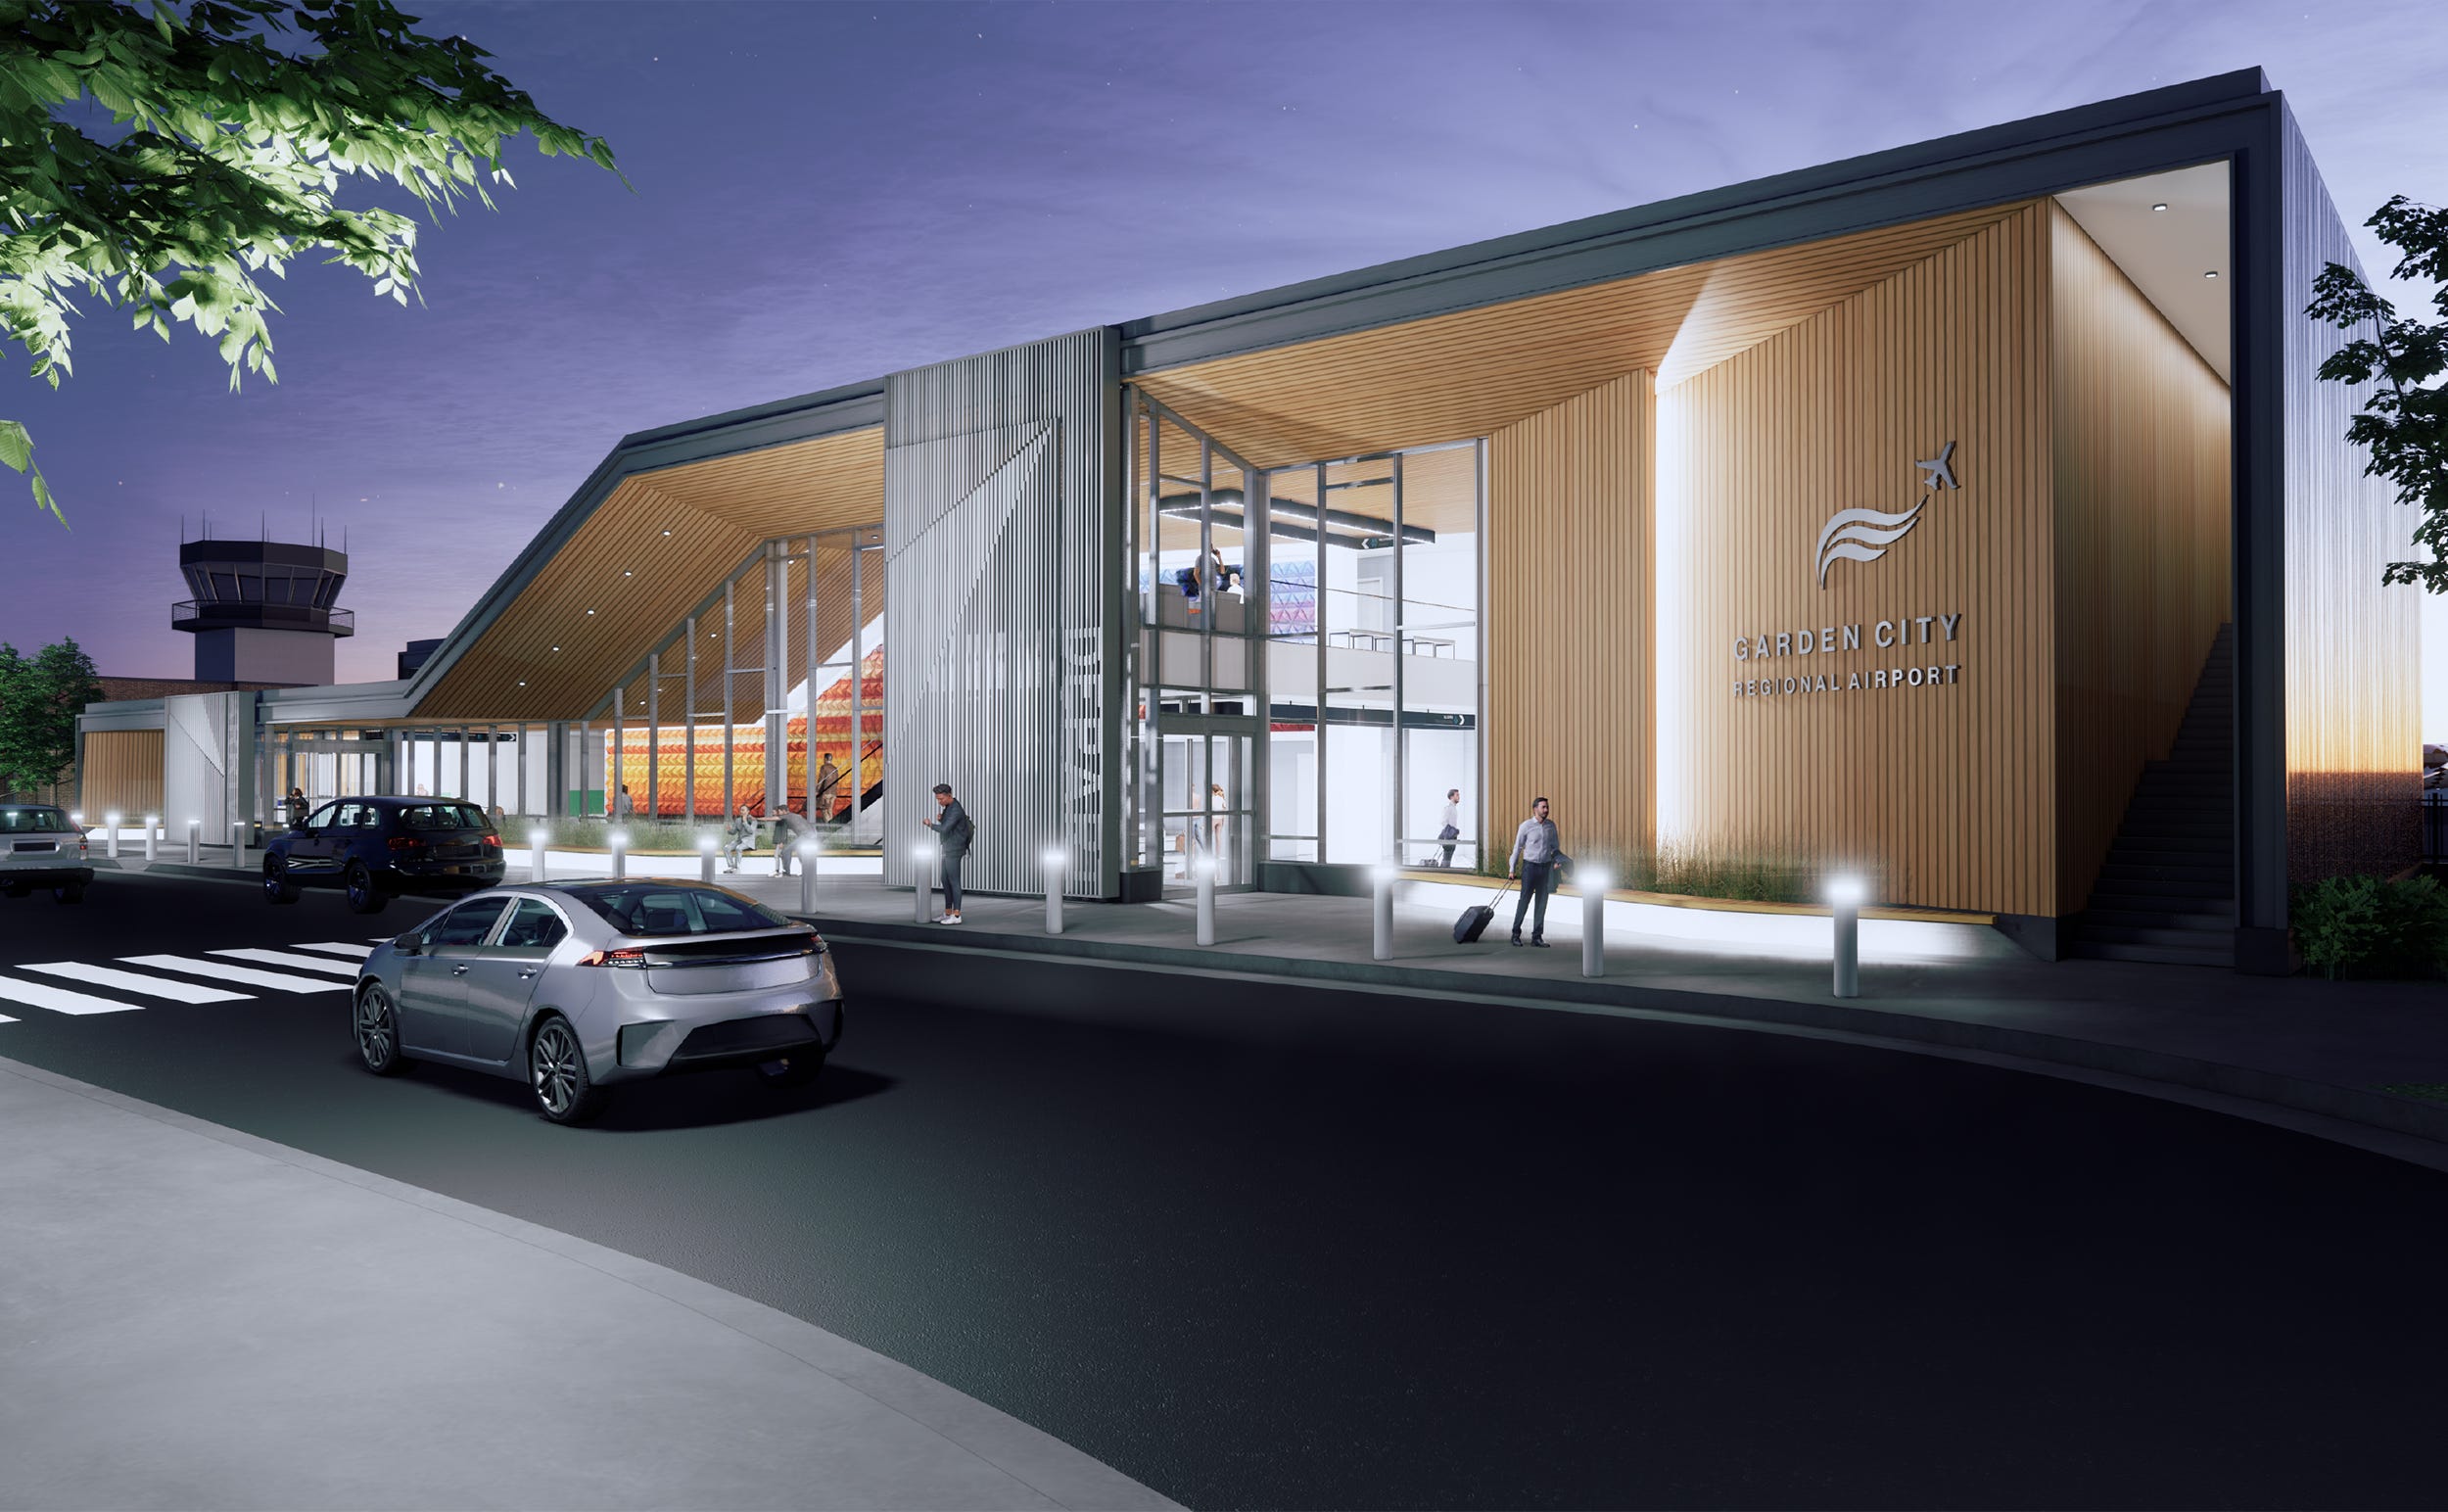 Garden City Regional Airport Terminal Project Update